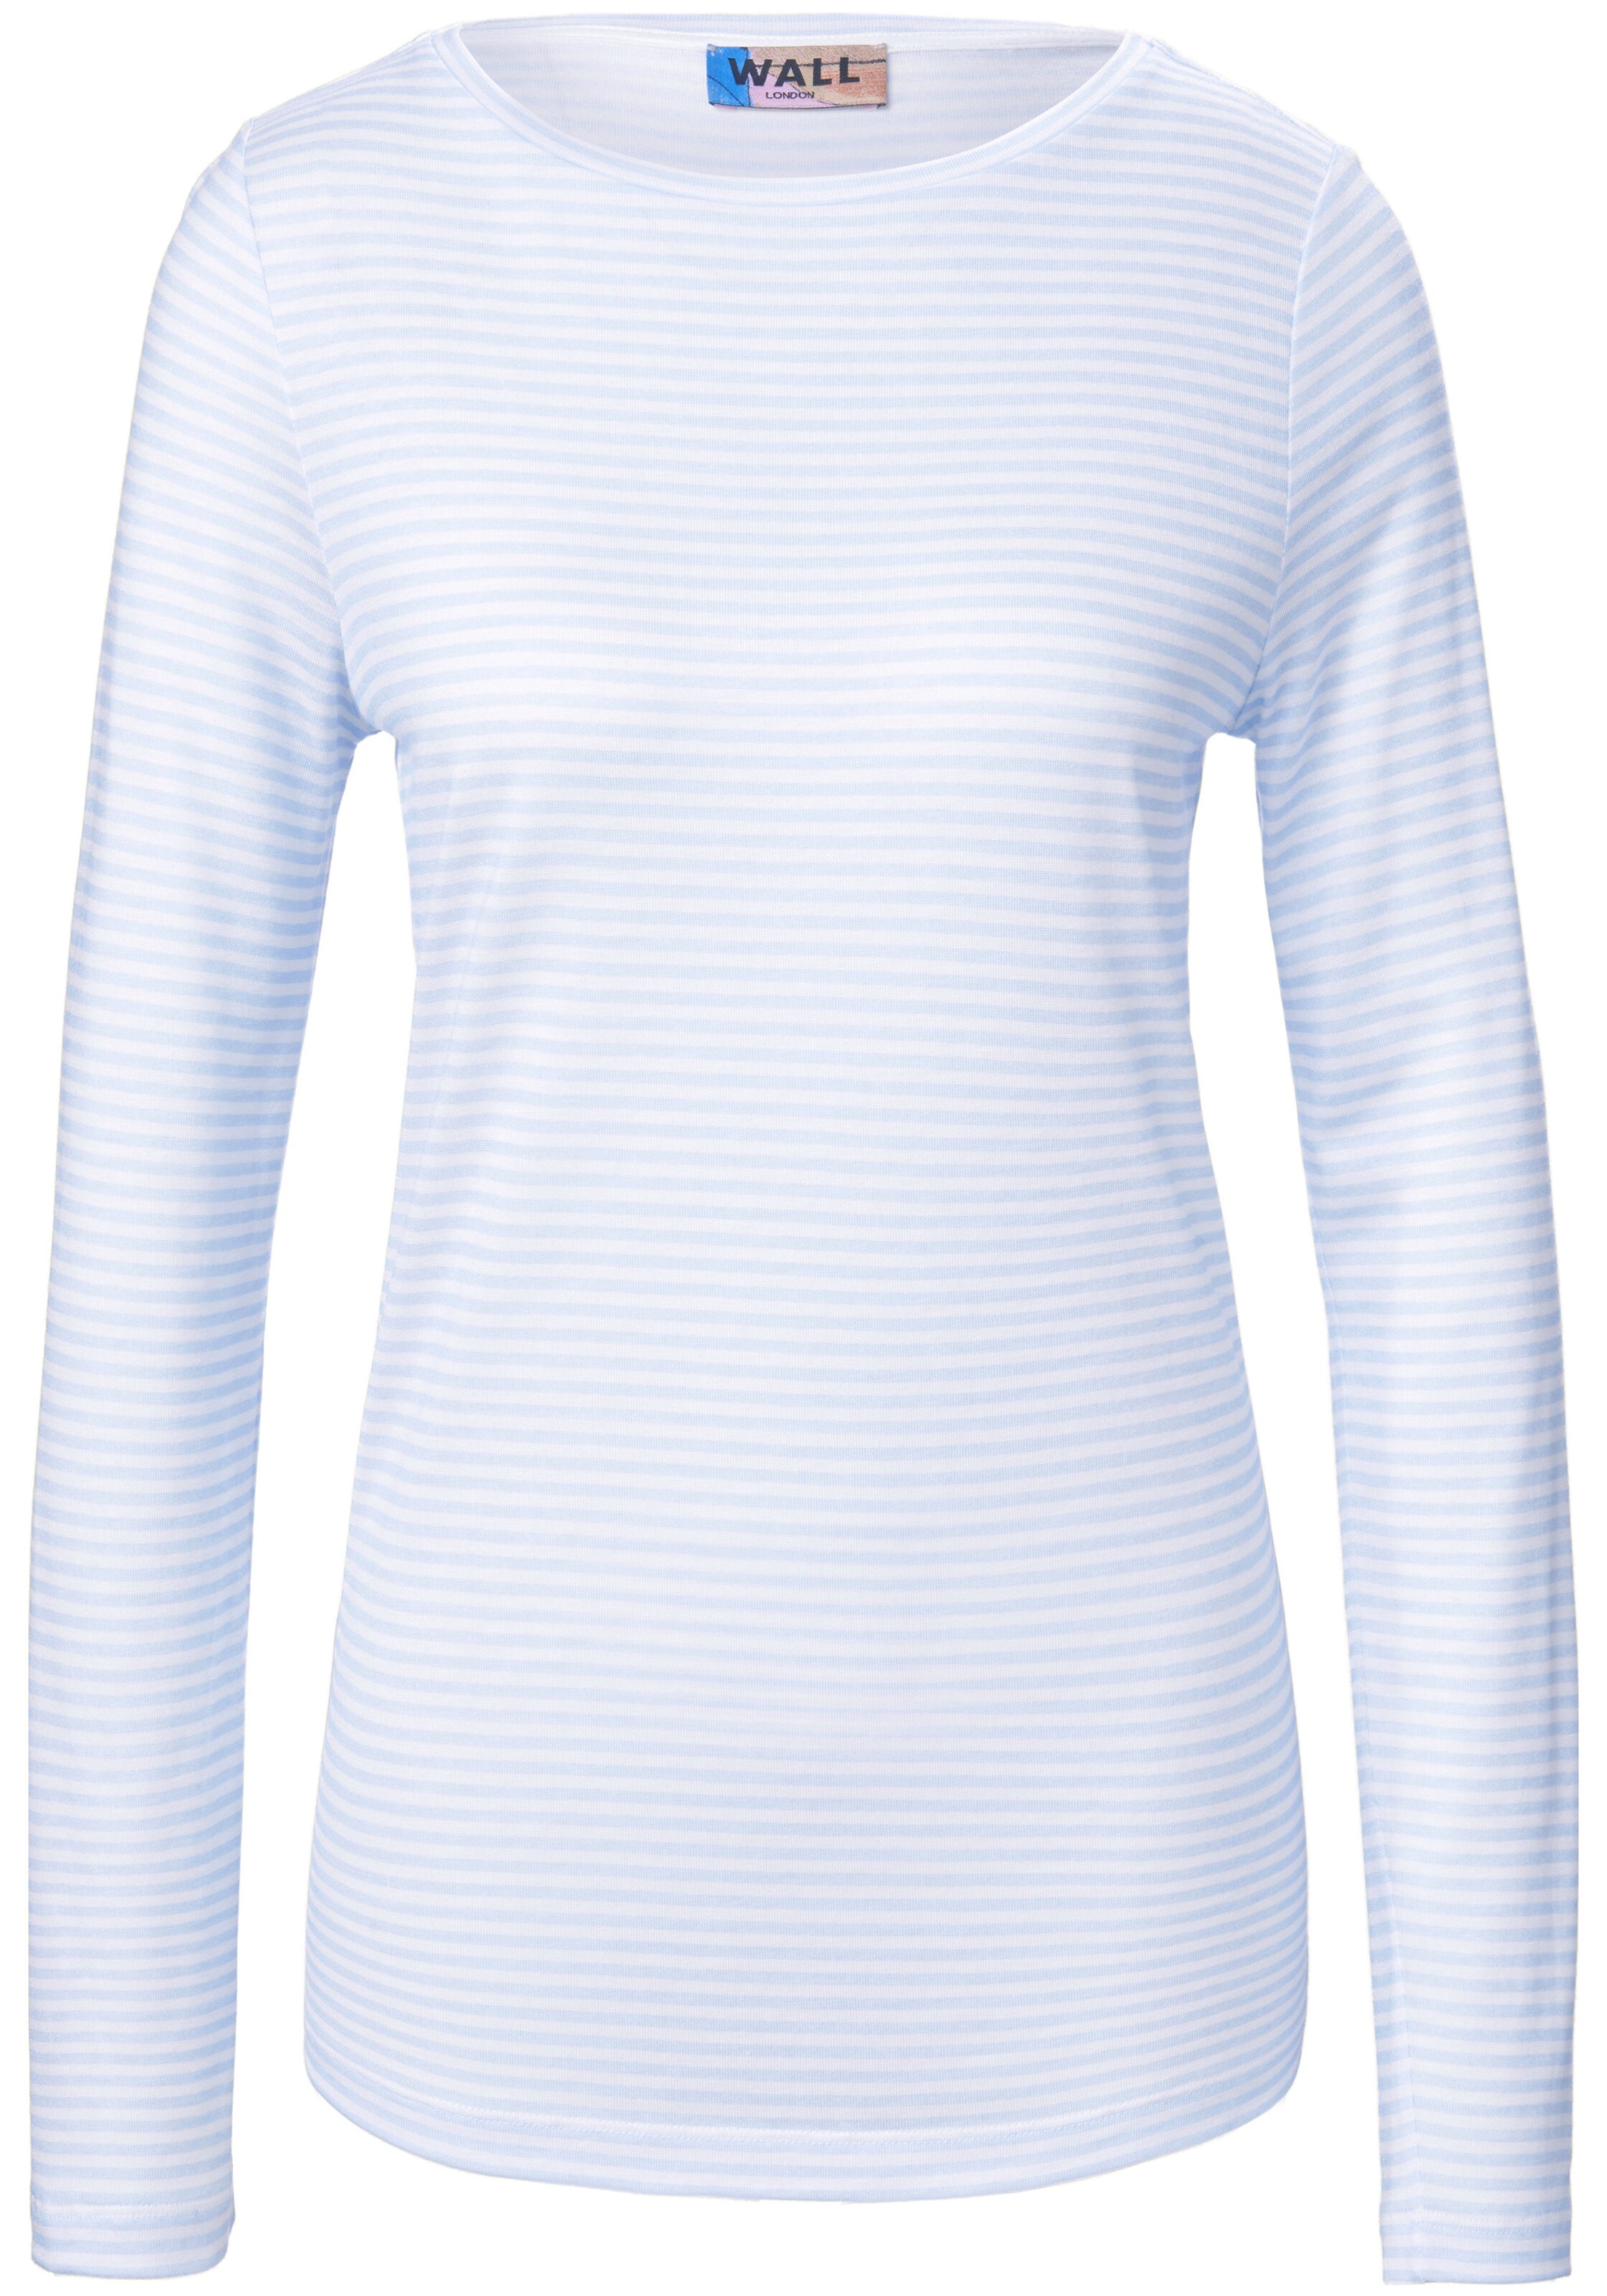 Frauen Shirts & Tops WALL London Shirt in Blau, Weiß - YP61366